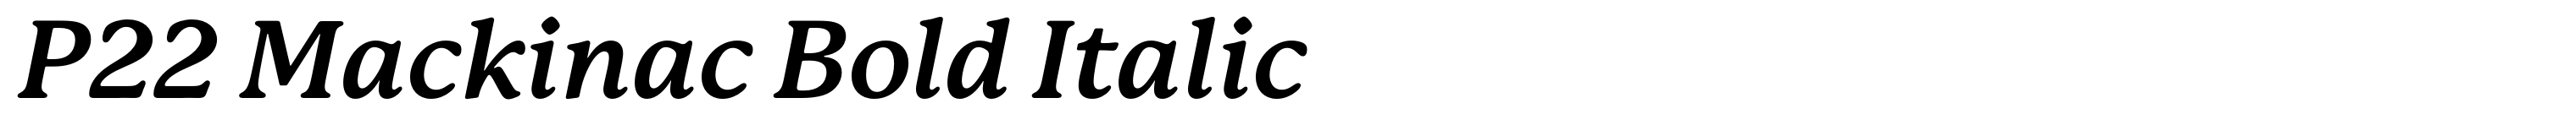 P22 Mackinac Bold Italic